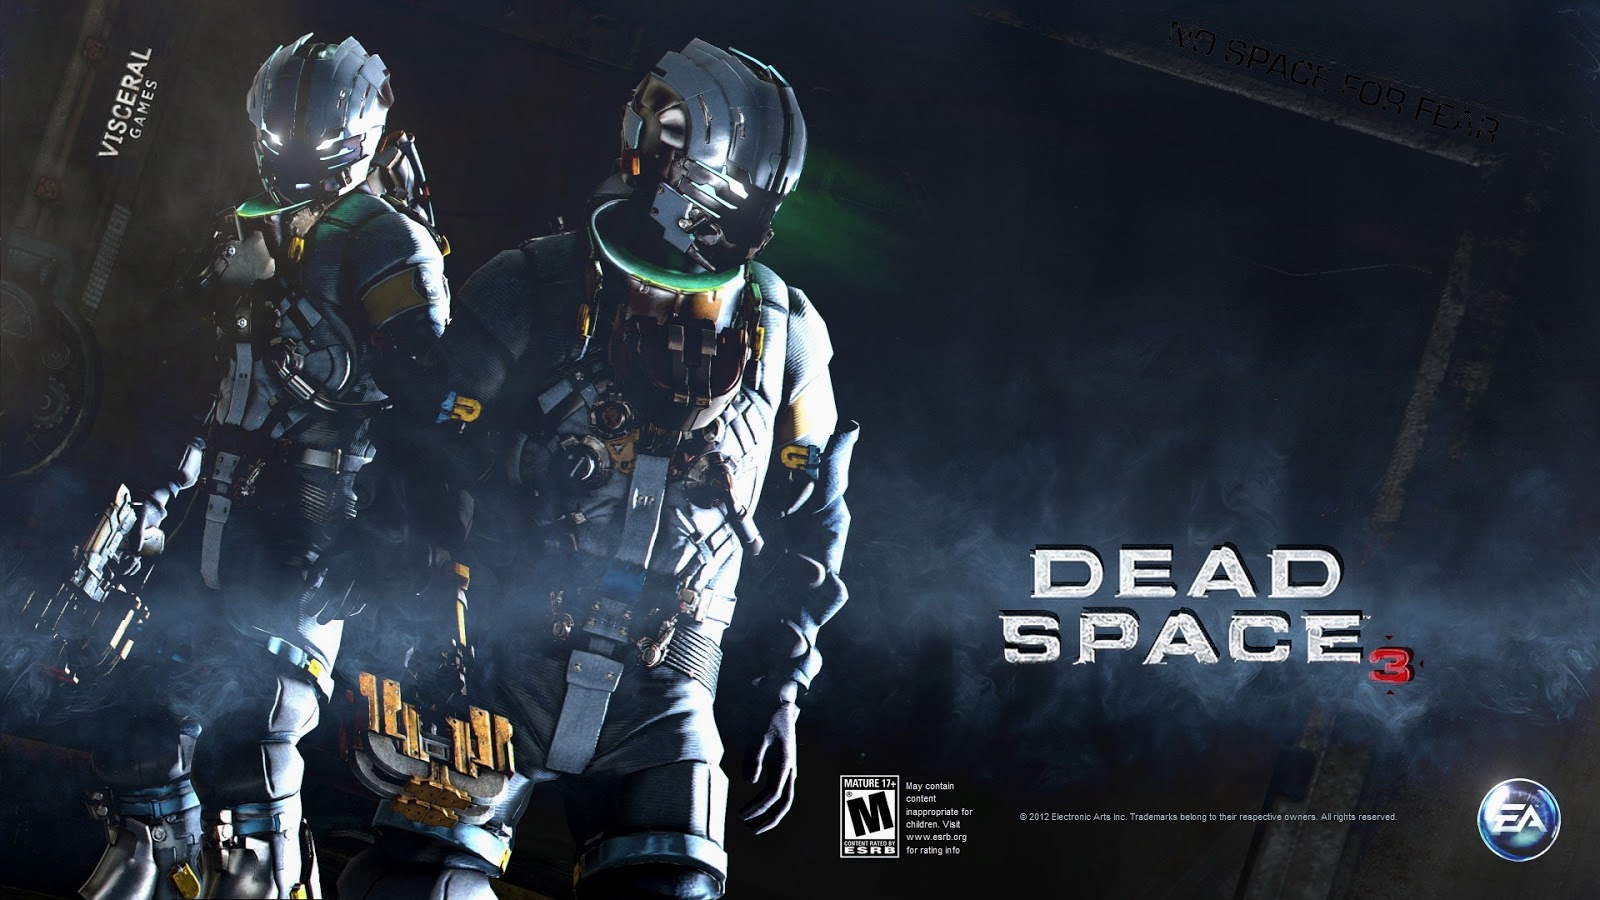 Dead Space 3 Game Wallpaper HD Full HD Desktop Wallpapers 1080p